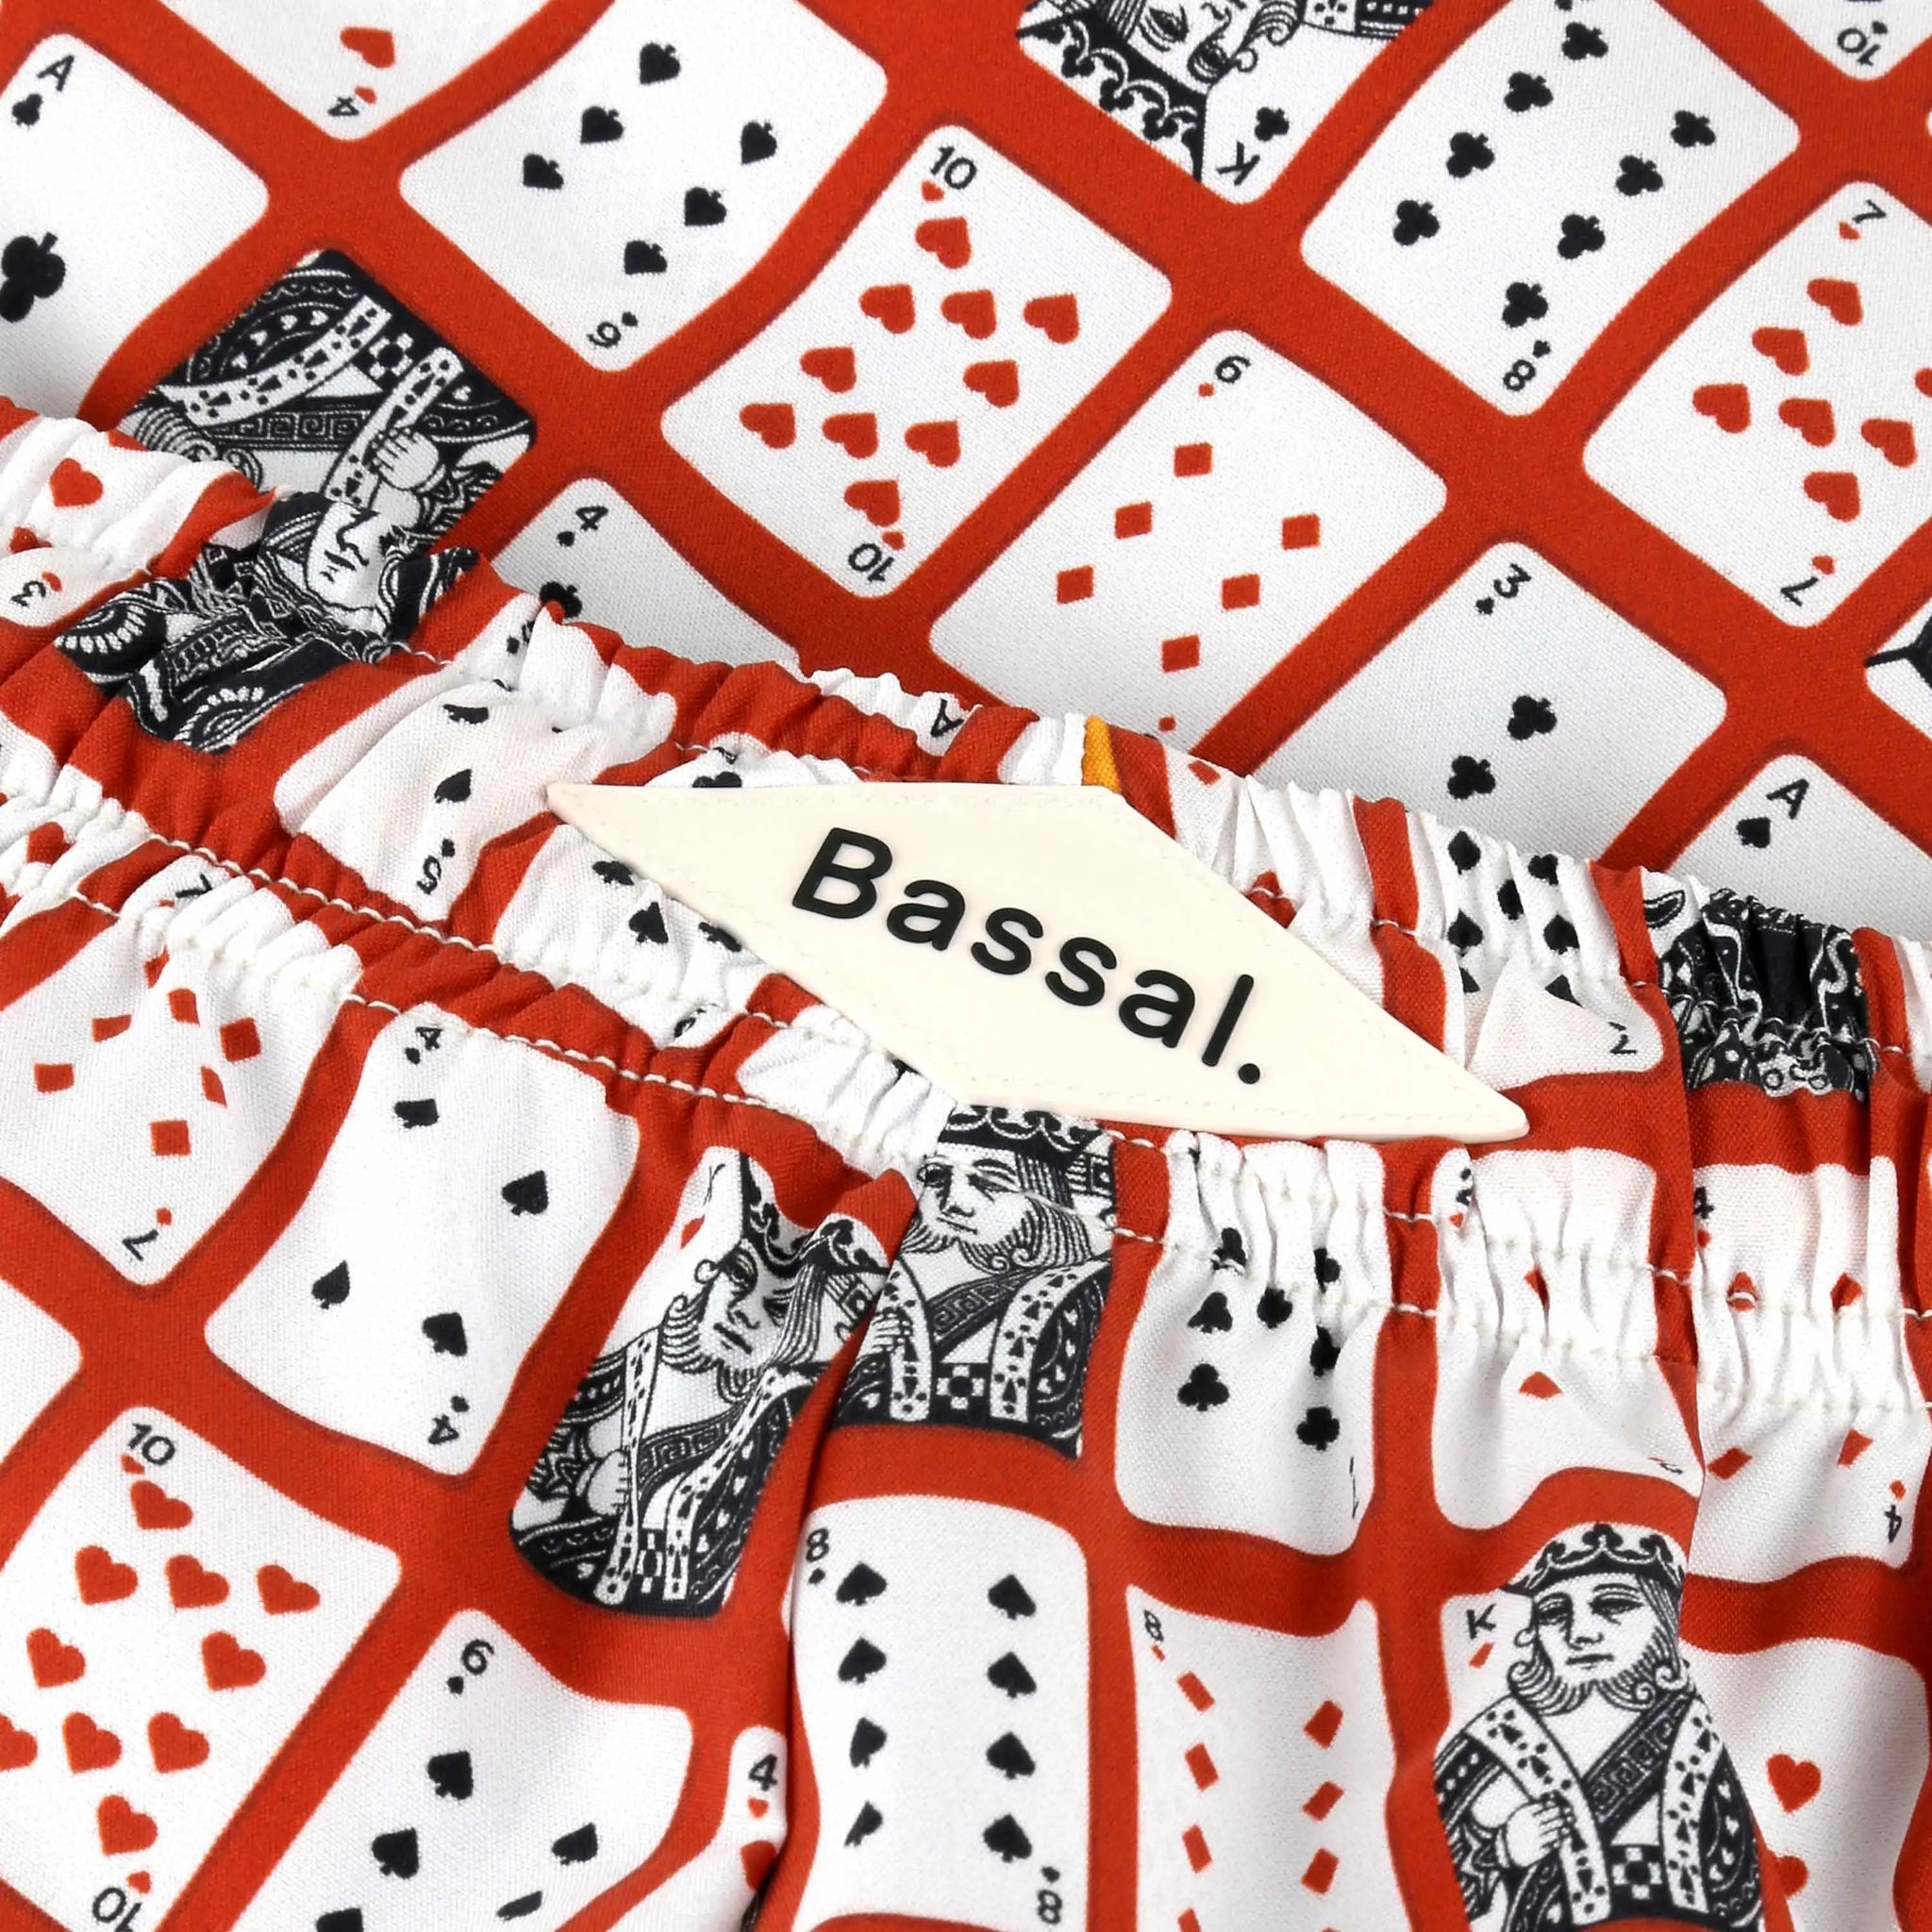 Poker Swimwear Bassal.